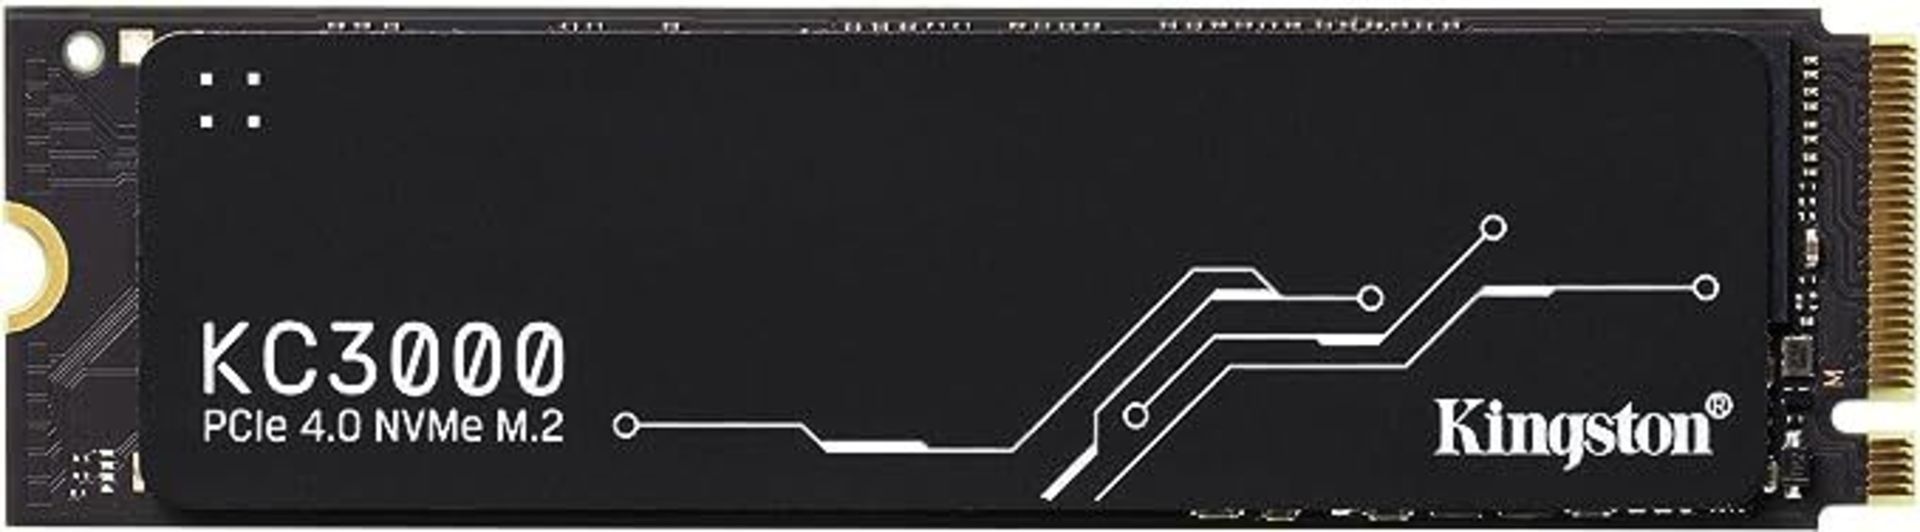 Kingston KC3000 PCIe 4.0 NVMe M.2 SSD - High-performance storage for desktop and laptop PCs -